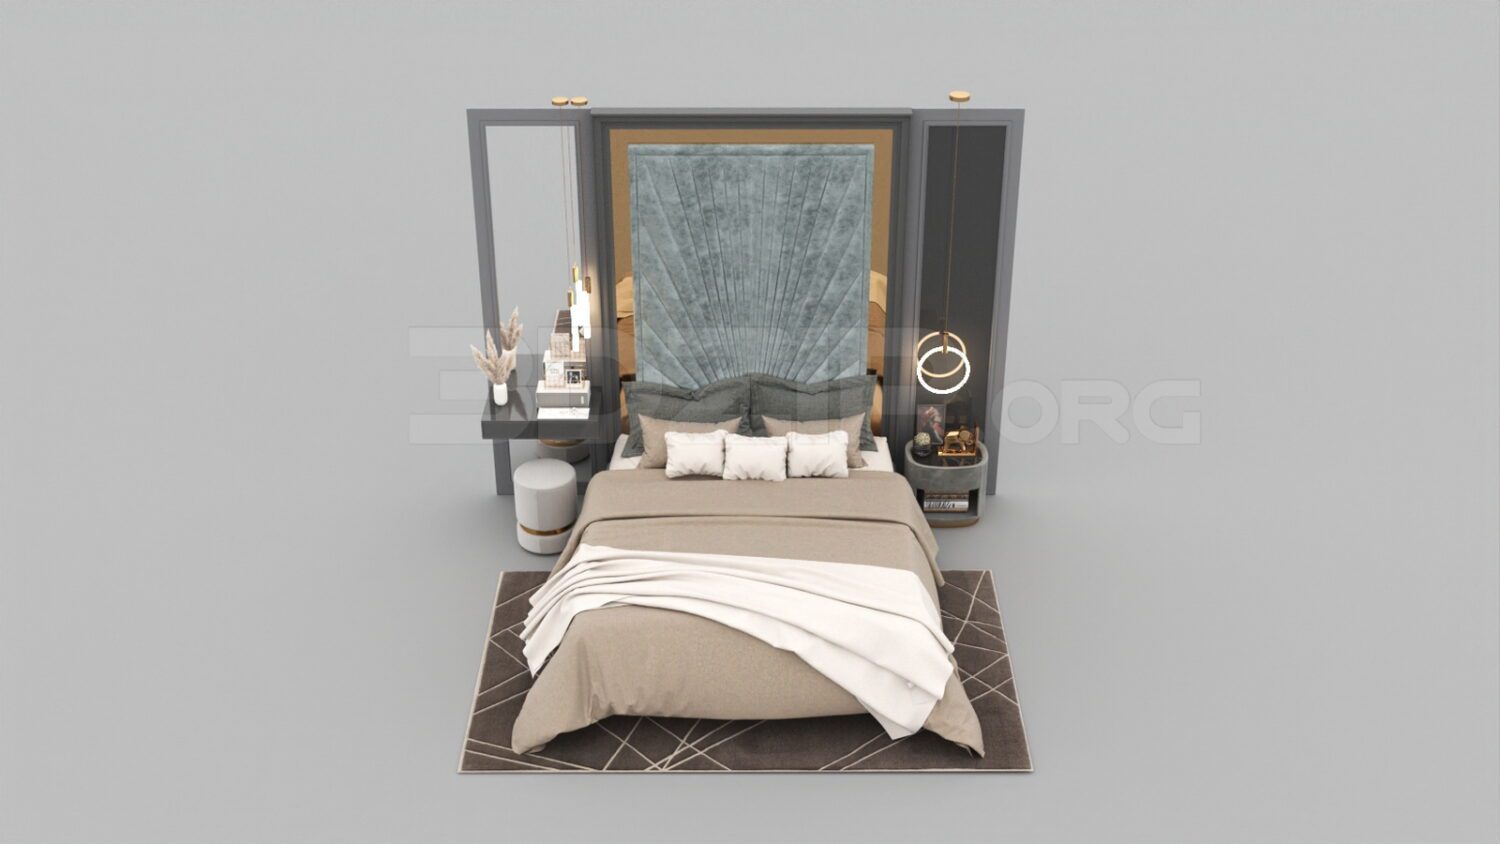 3082. Free 3D Bed Model Download